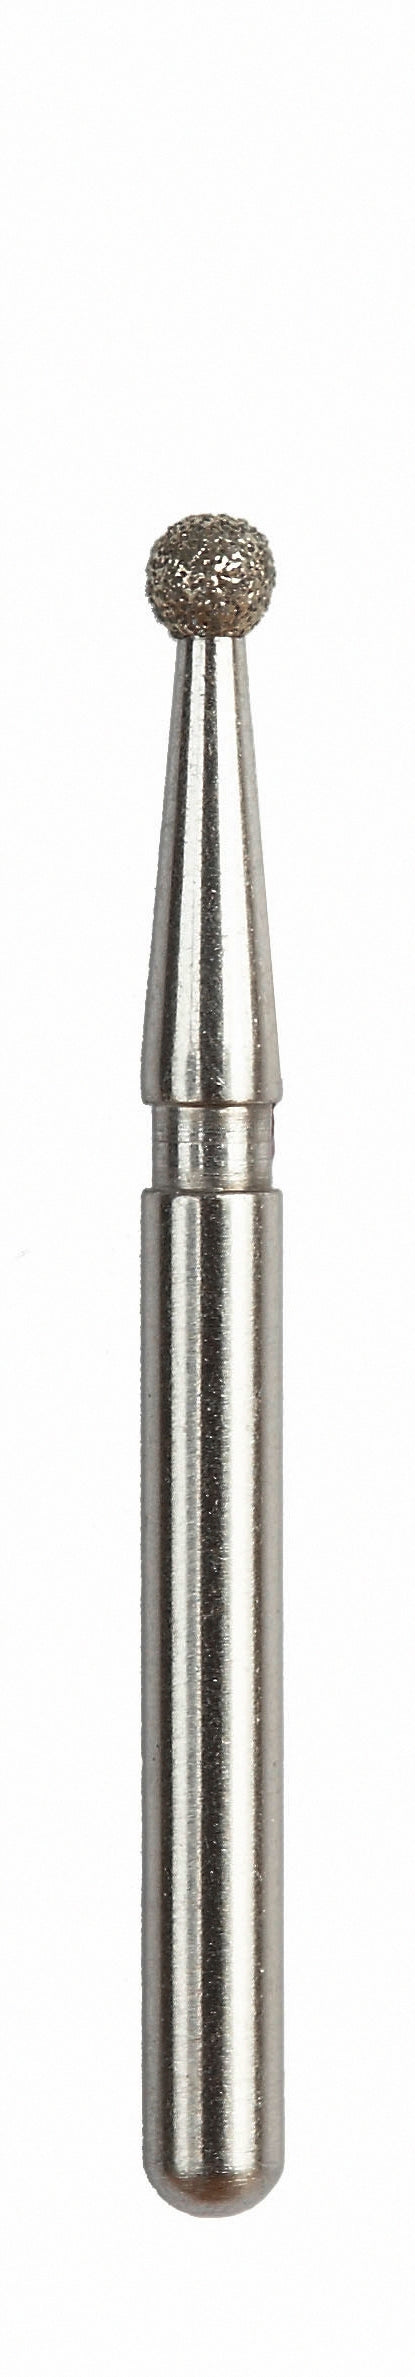 801014 Medium - Round - Cavity Prep Bur - Diamond Coated (Pack of 6)